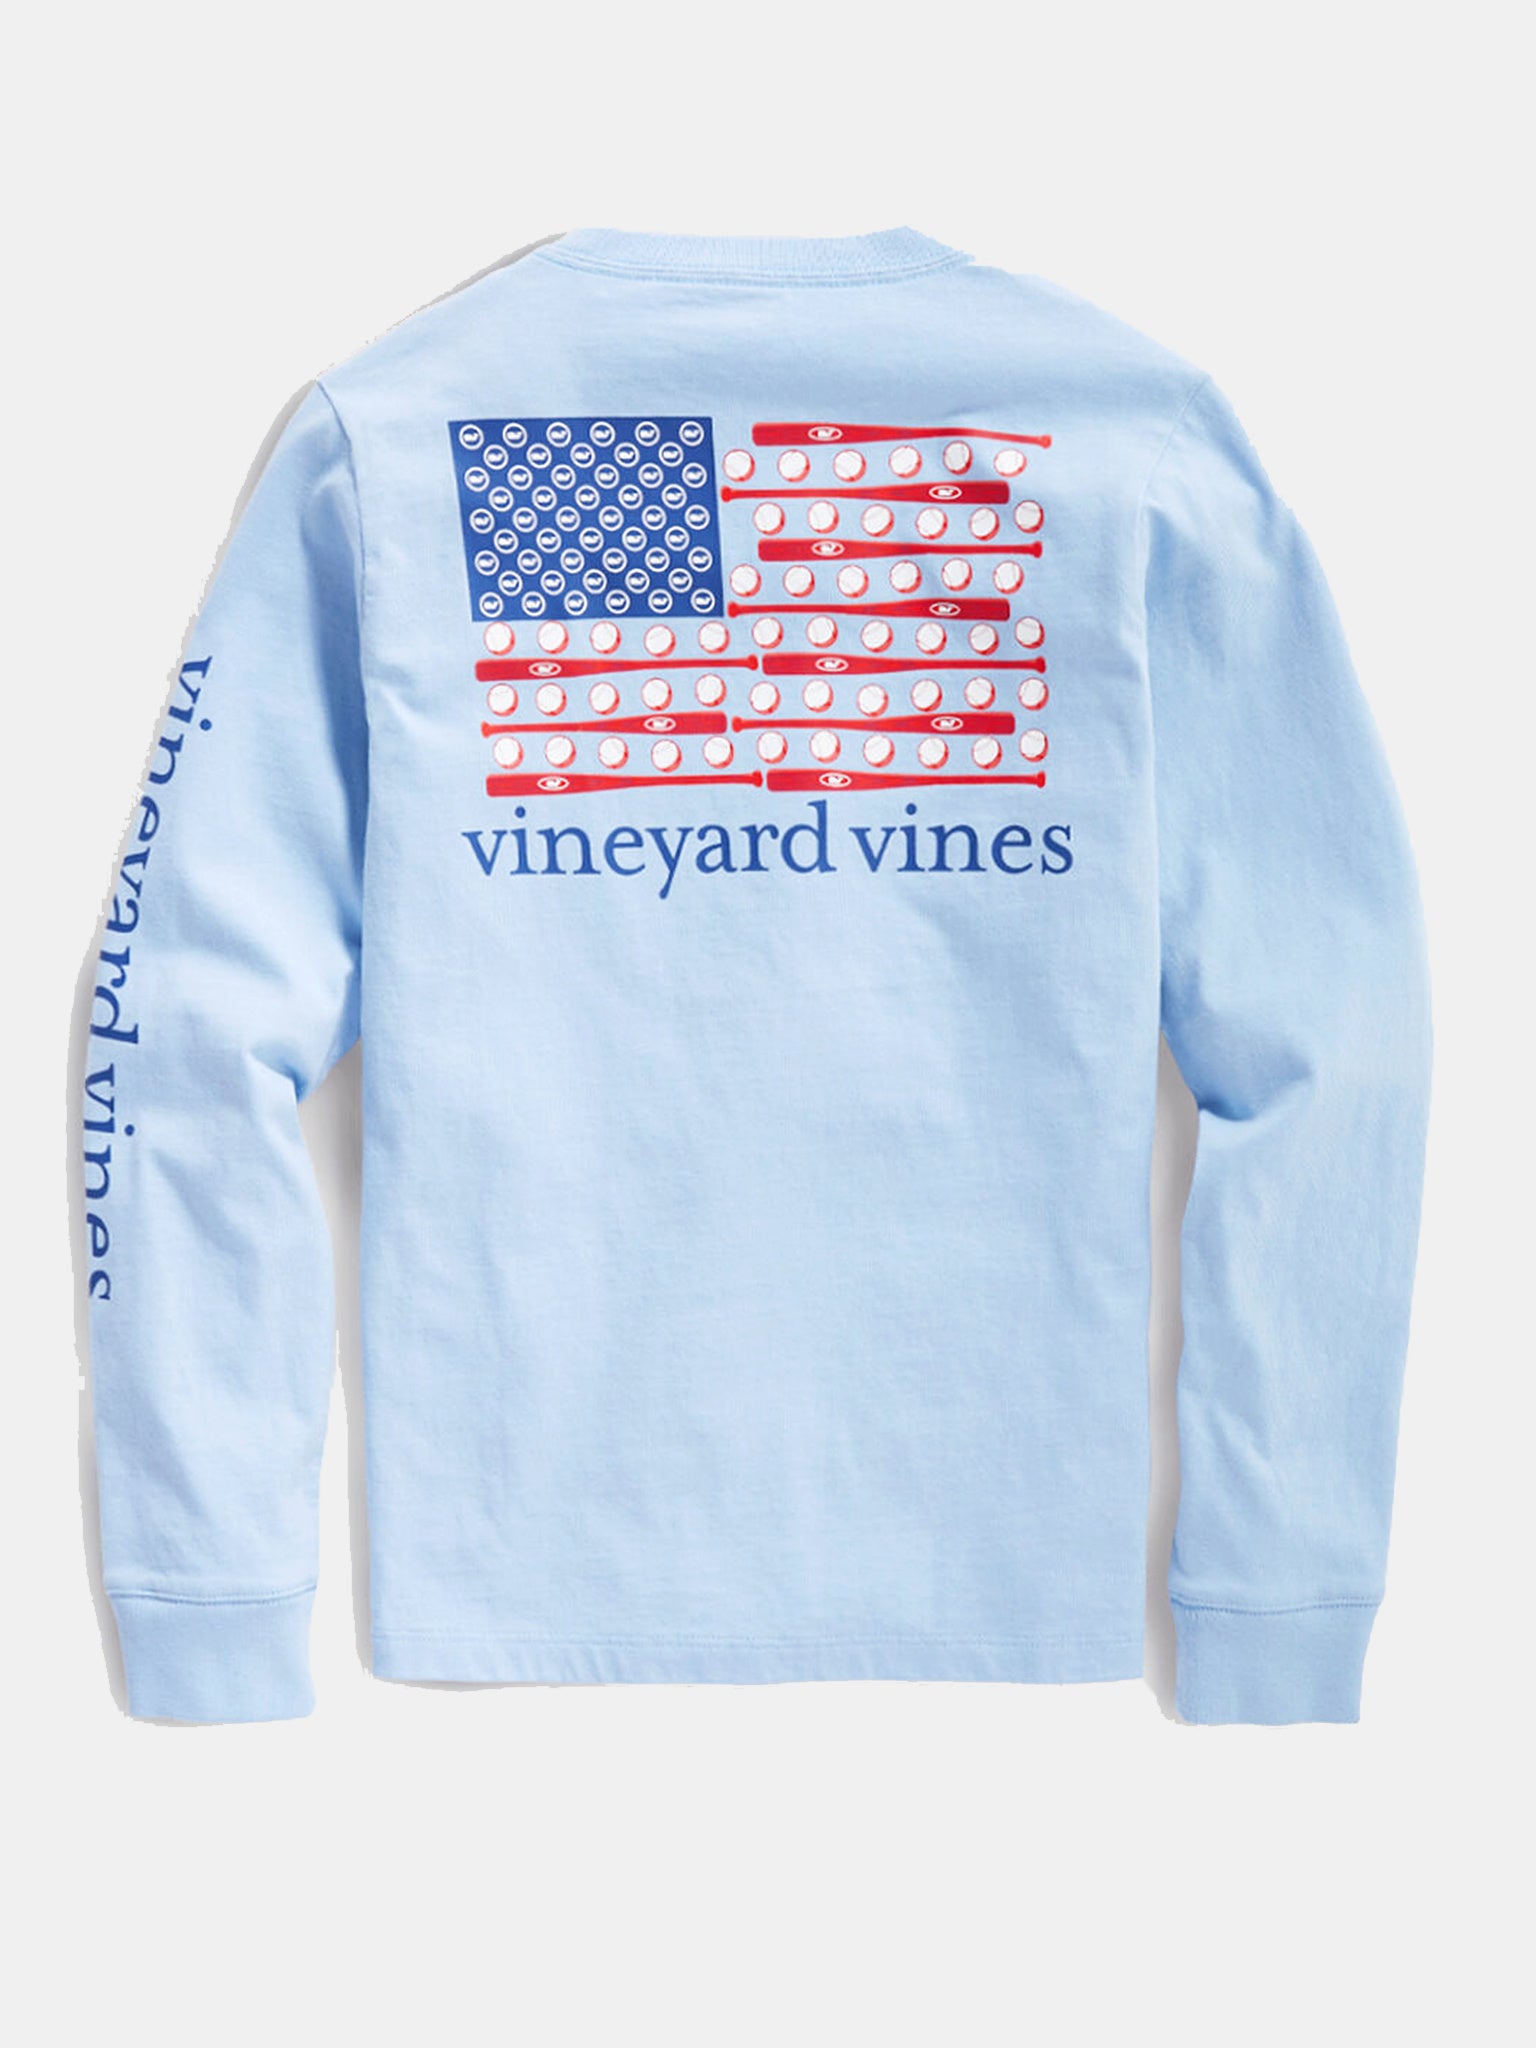 Vineyard Vines Men's Vineyard Vines Light Blue Chicago Cubs Baseball Cap  T-Shirt